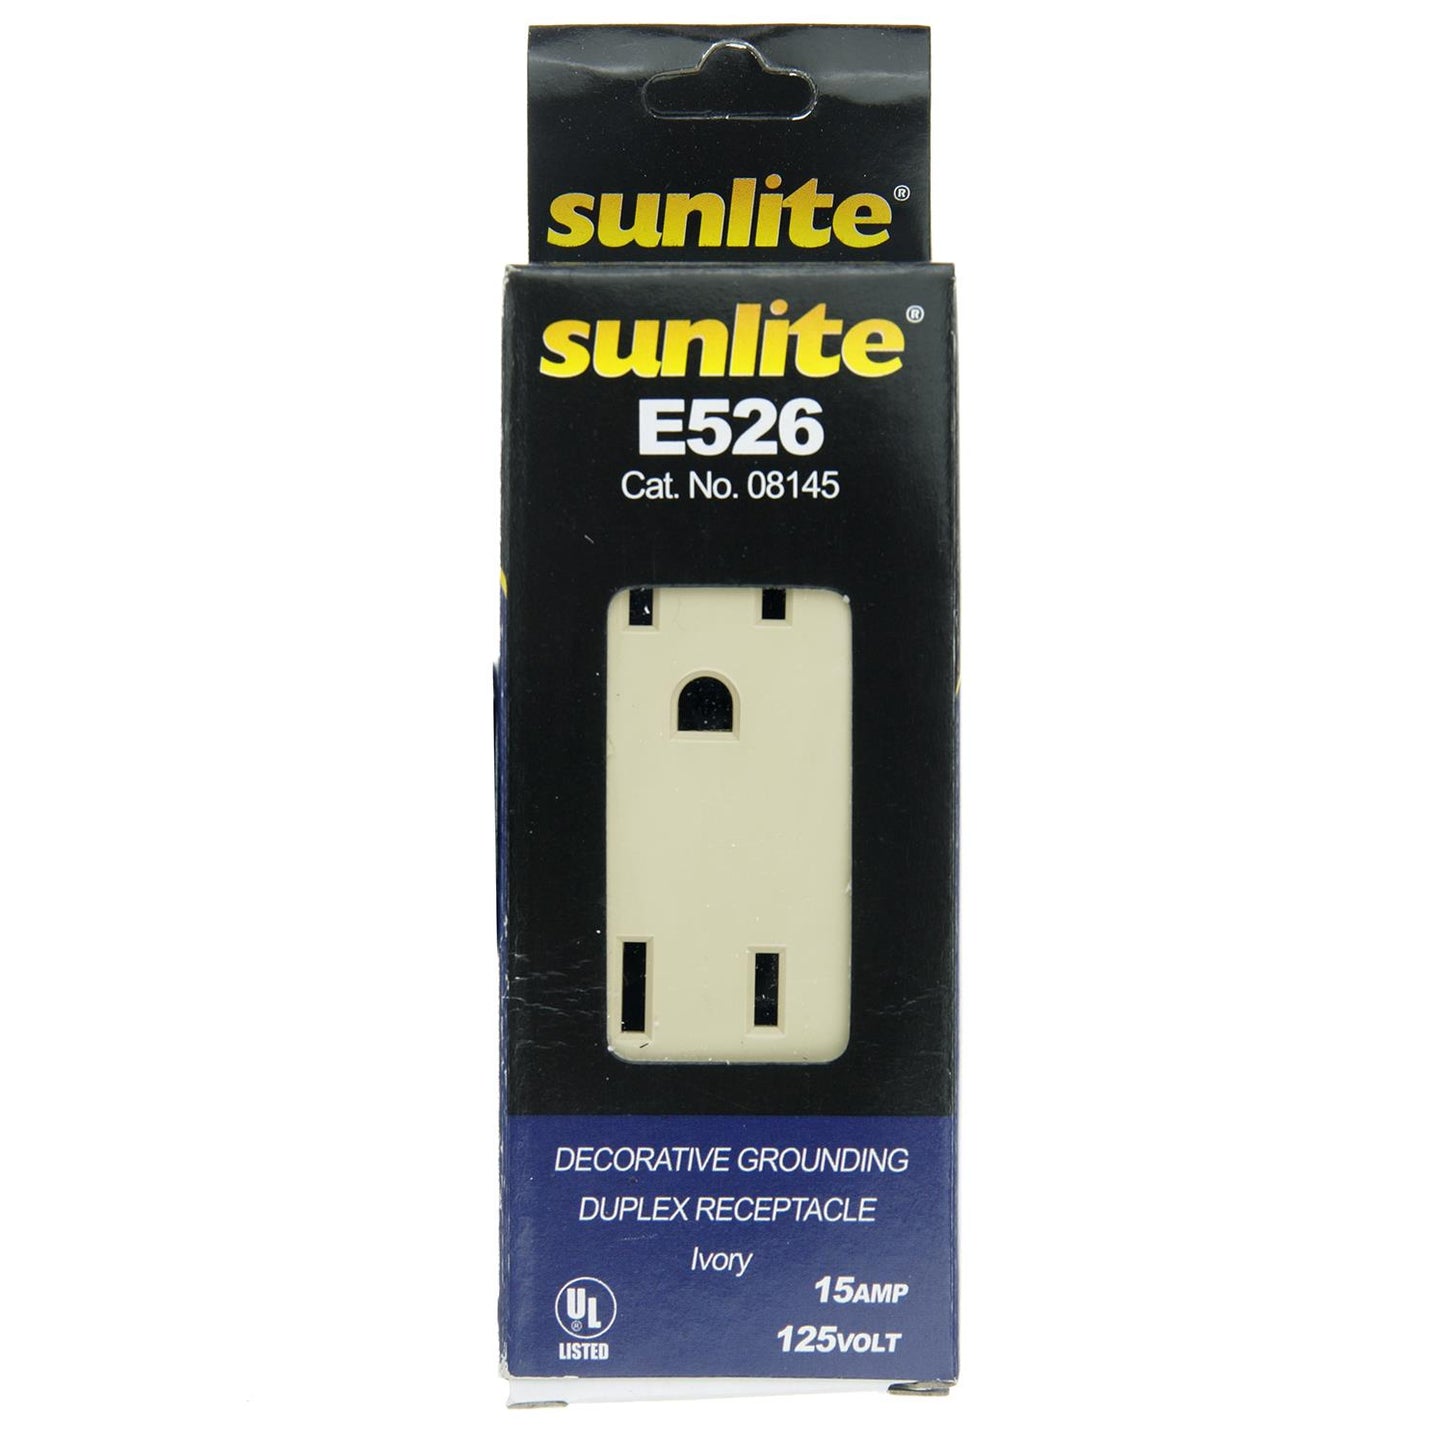 Sunlite E526 15A Decorative Duplex Receptacle, Ivory